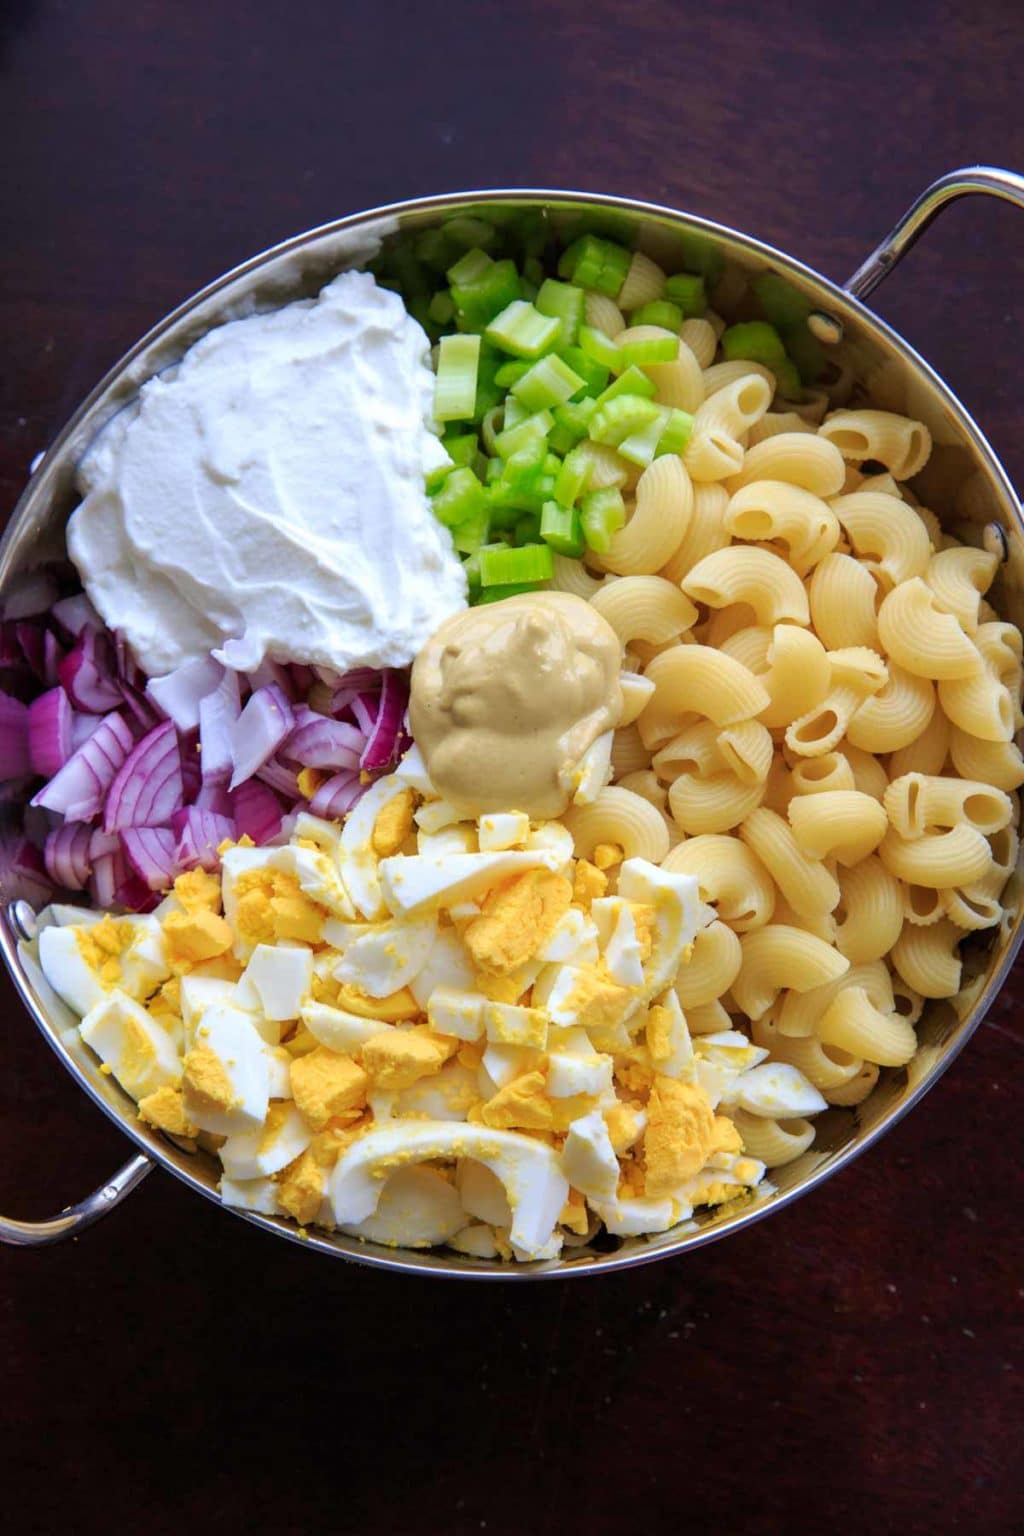 Deconstructed egg salad macaroni with yogurt, pasta, eggs, celery, onion and mustard.